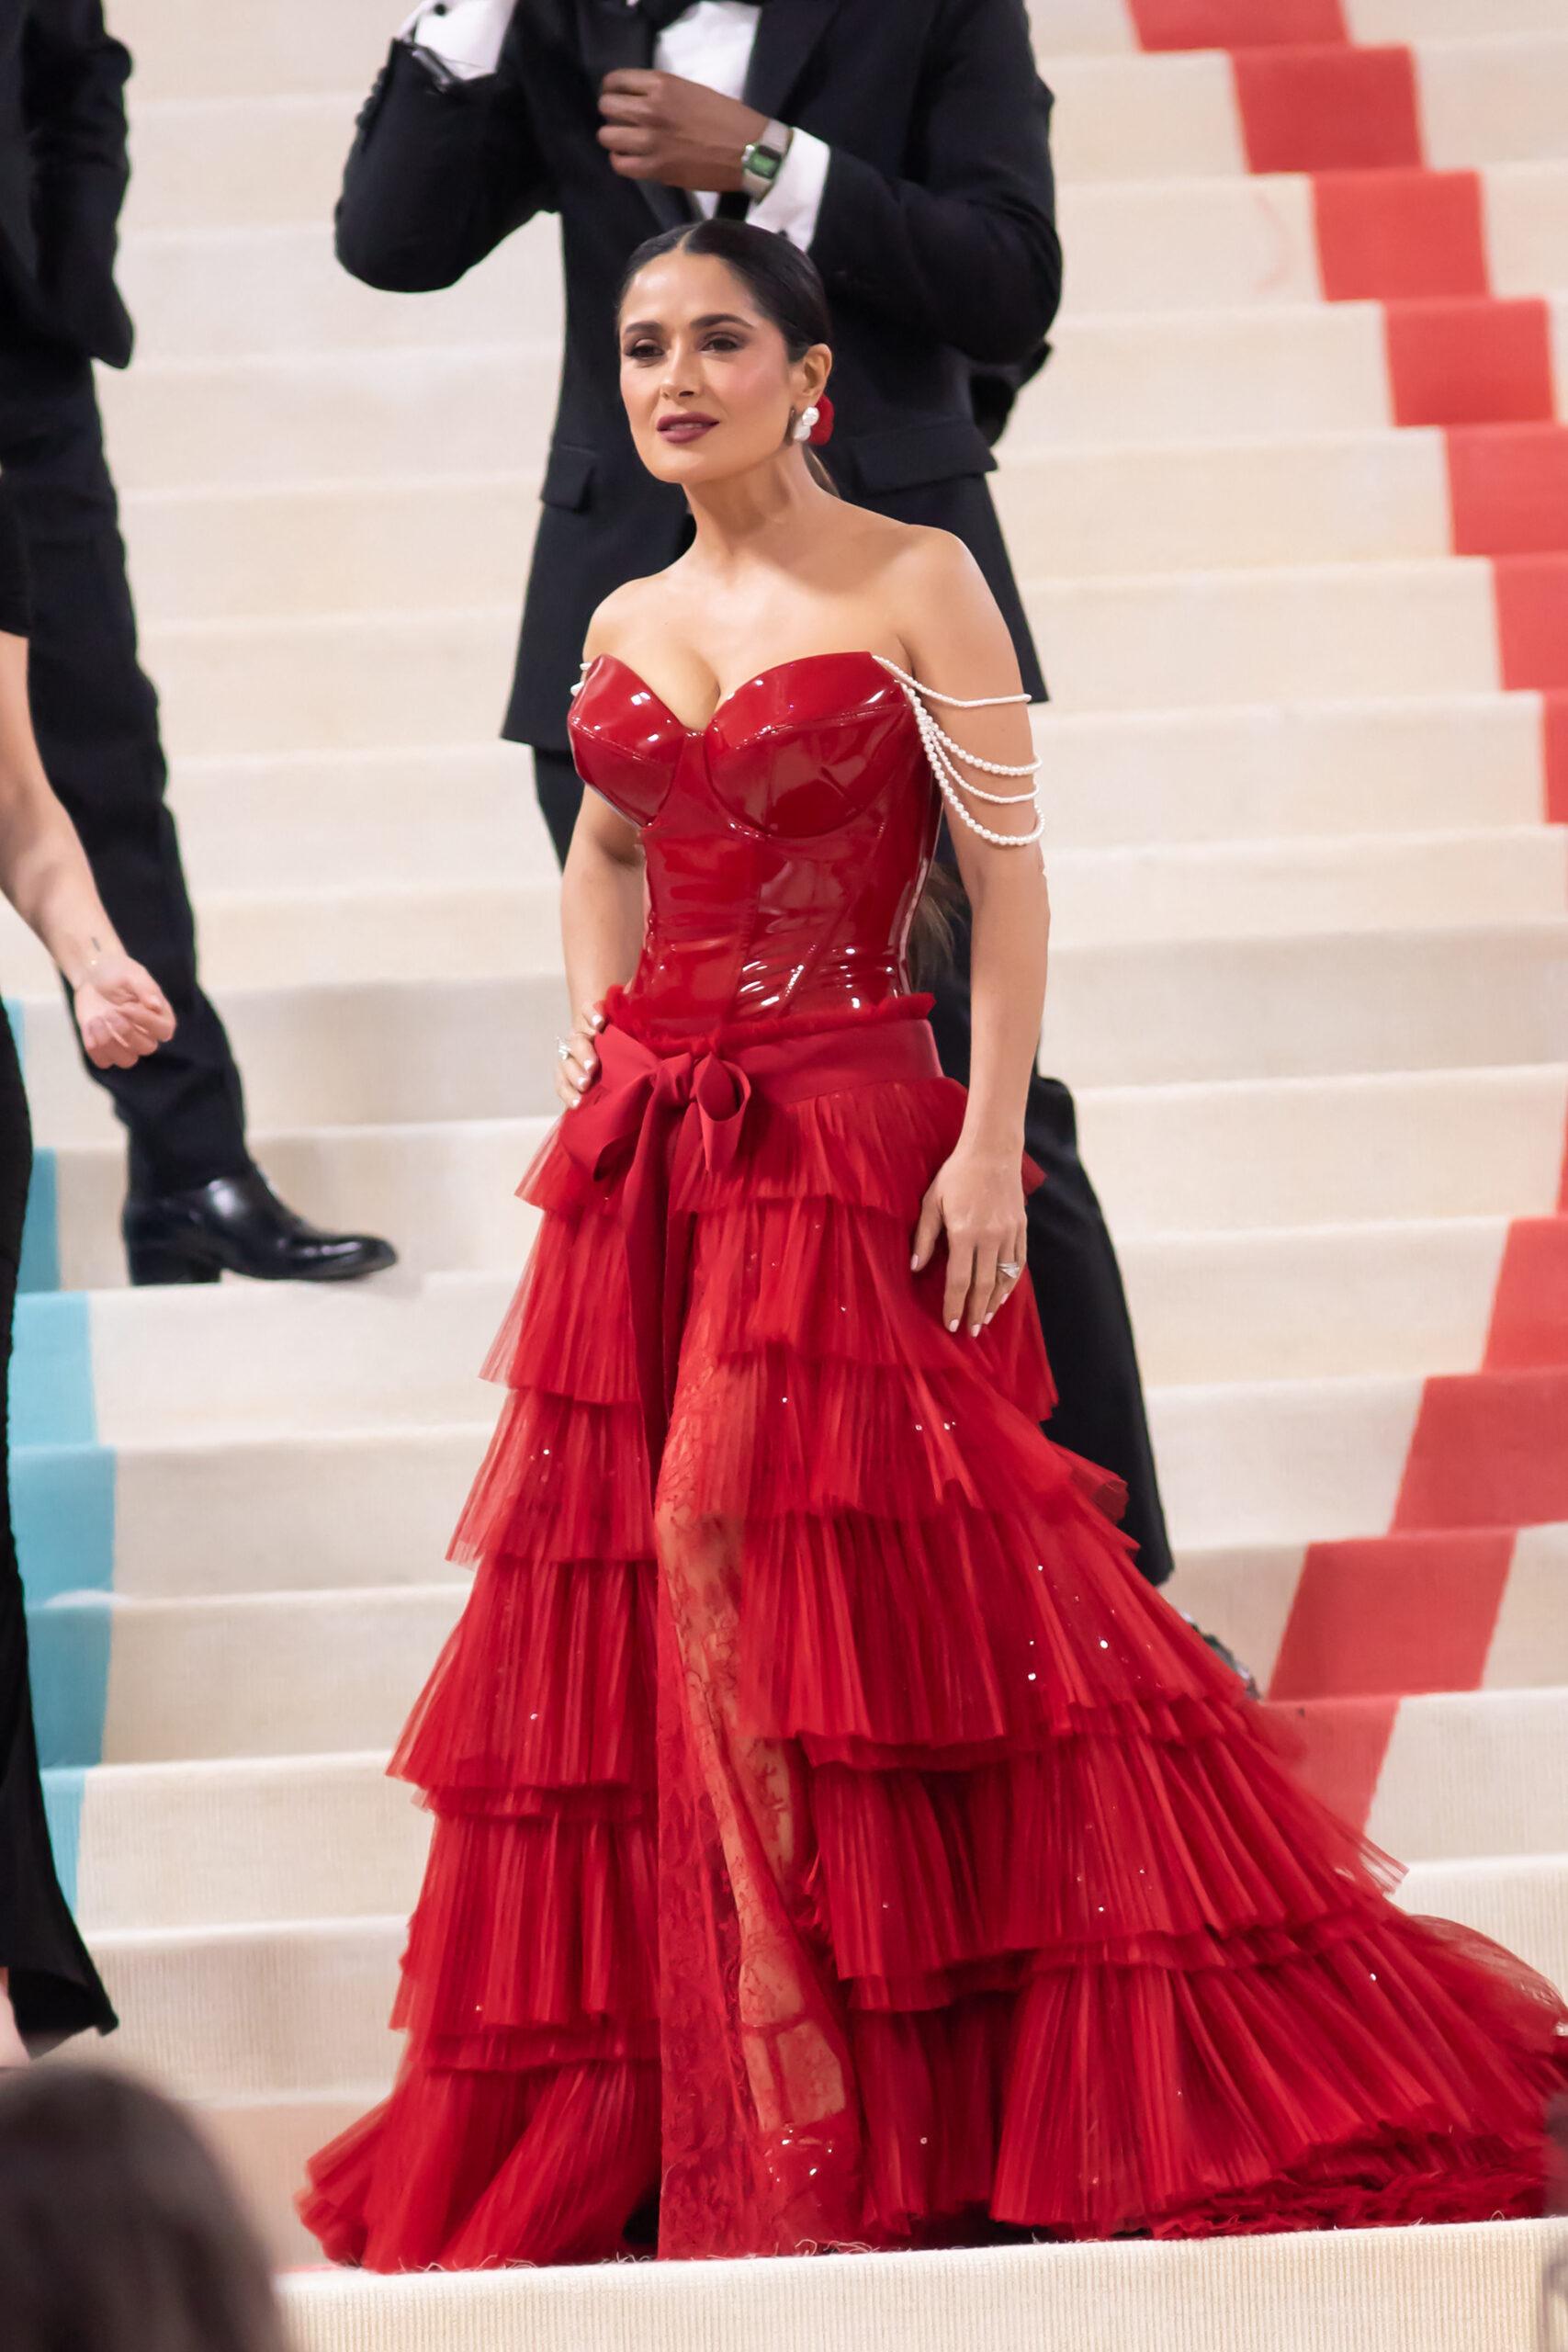 Salma Hayek in her strapless red met gala dress